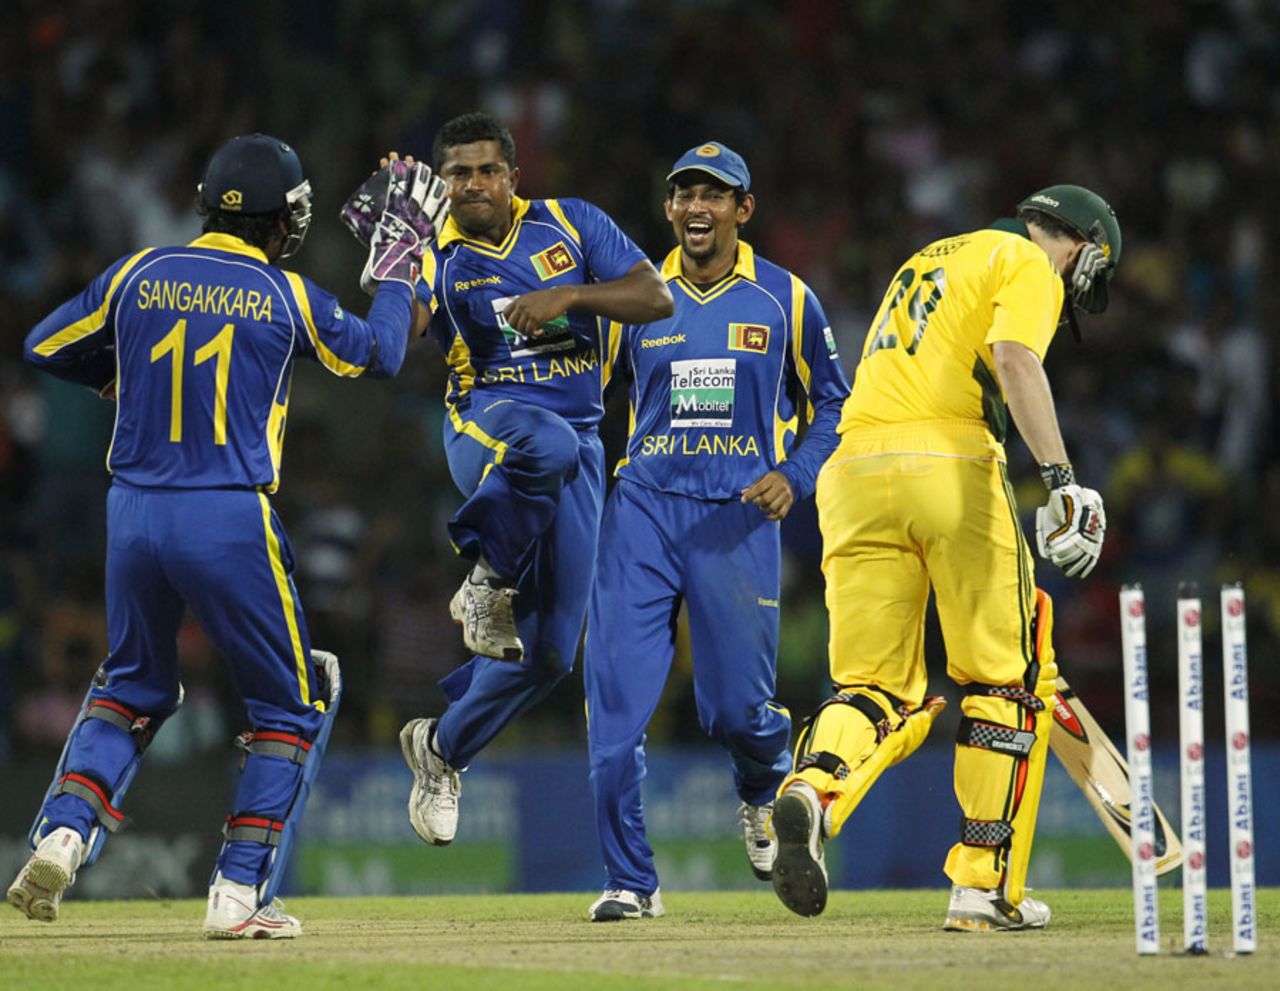 Rangana Herath celebrates the wicket of David Hussey, Sri Lanka v Australia, 2nd Twenty20, Pallekele, August 8, 2011